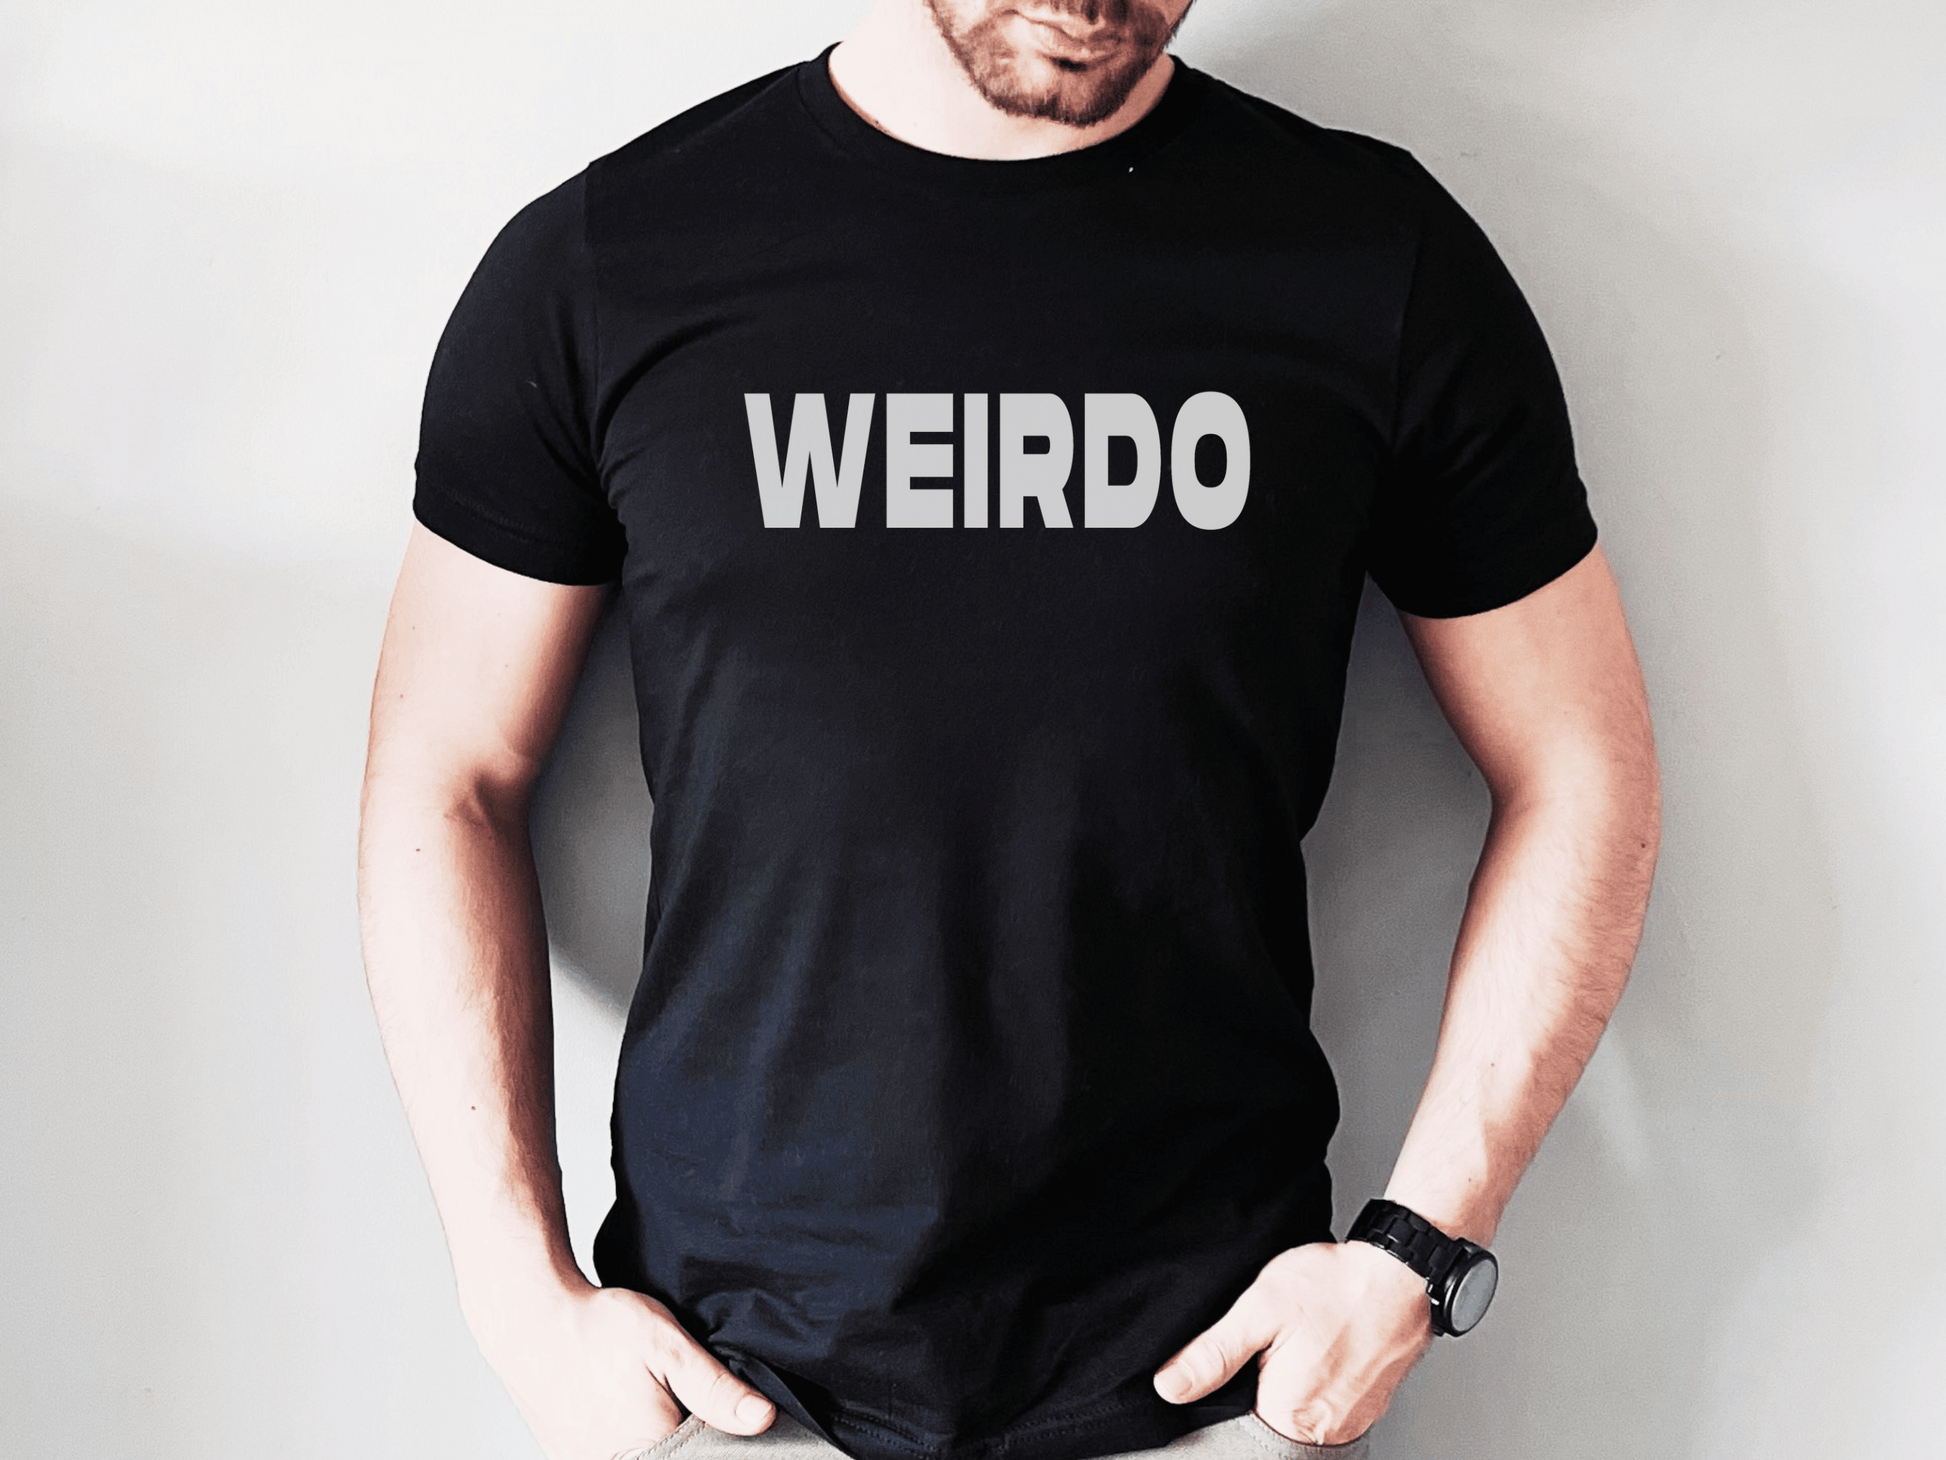 Weirdo T-Shirt in Black